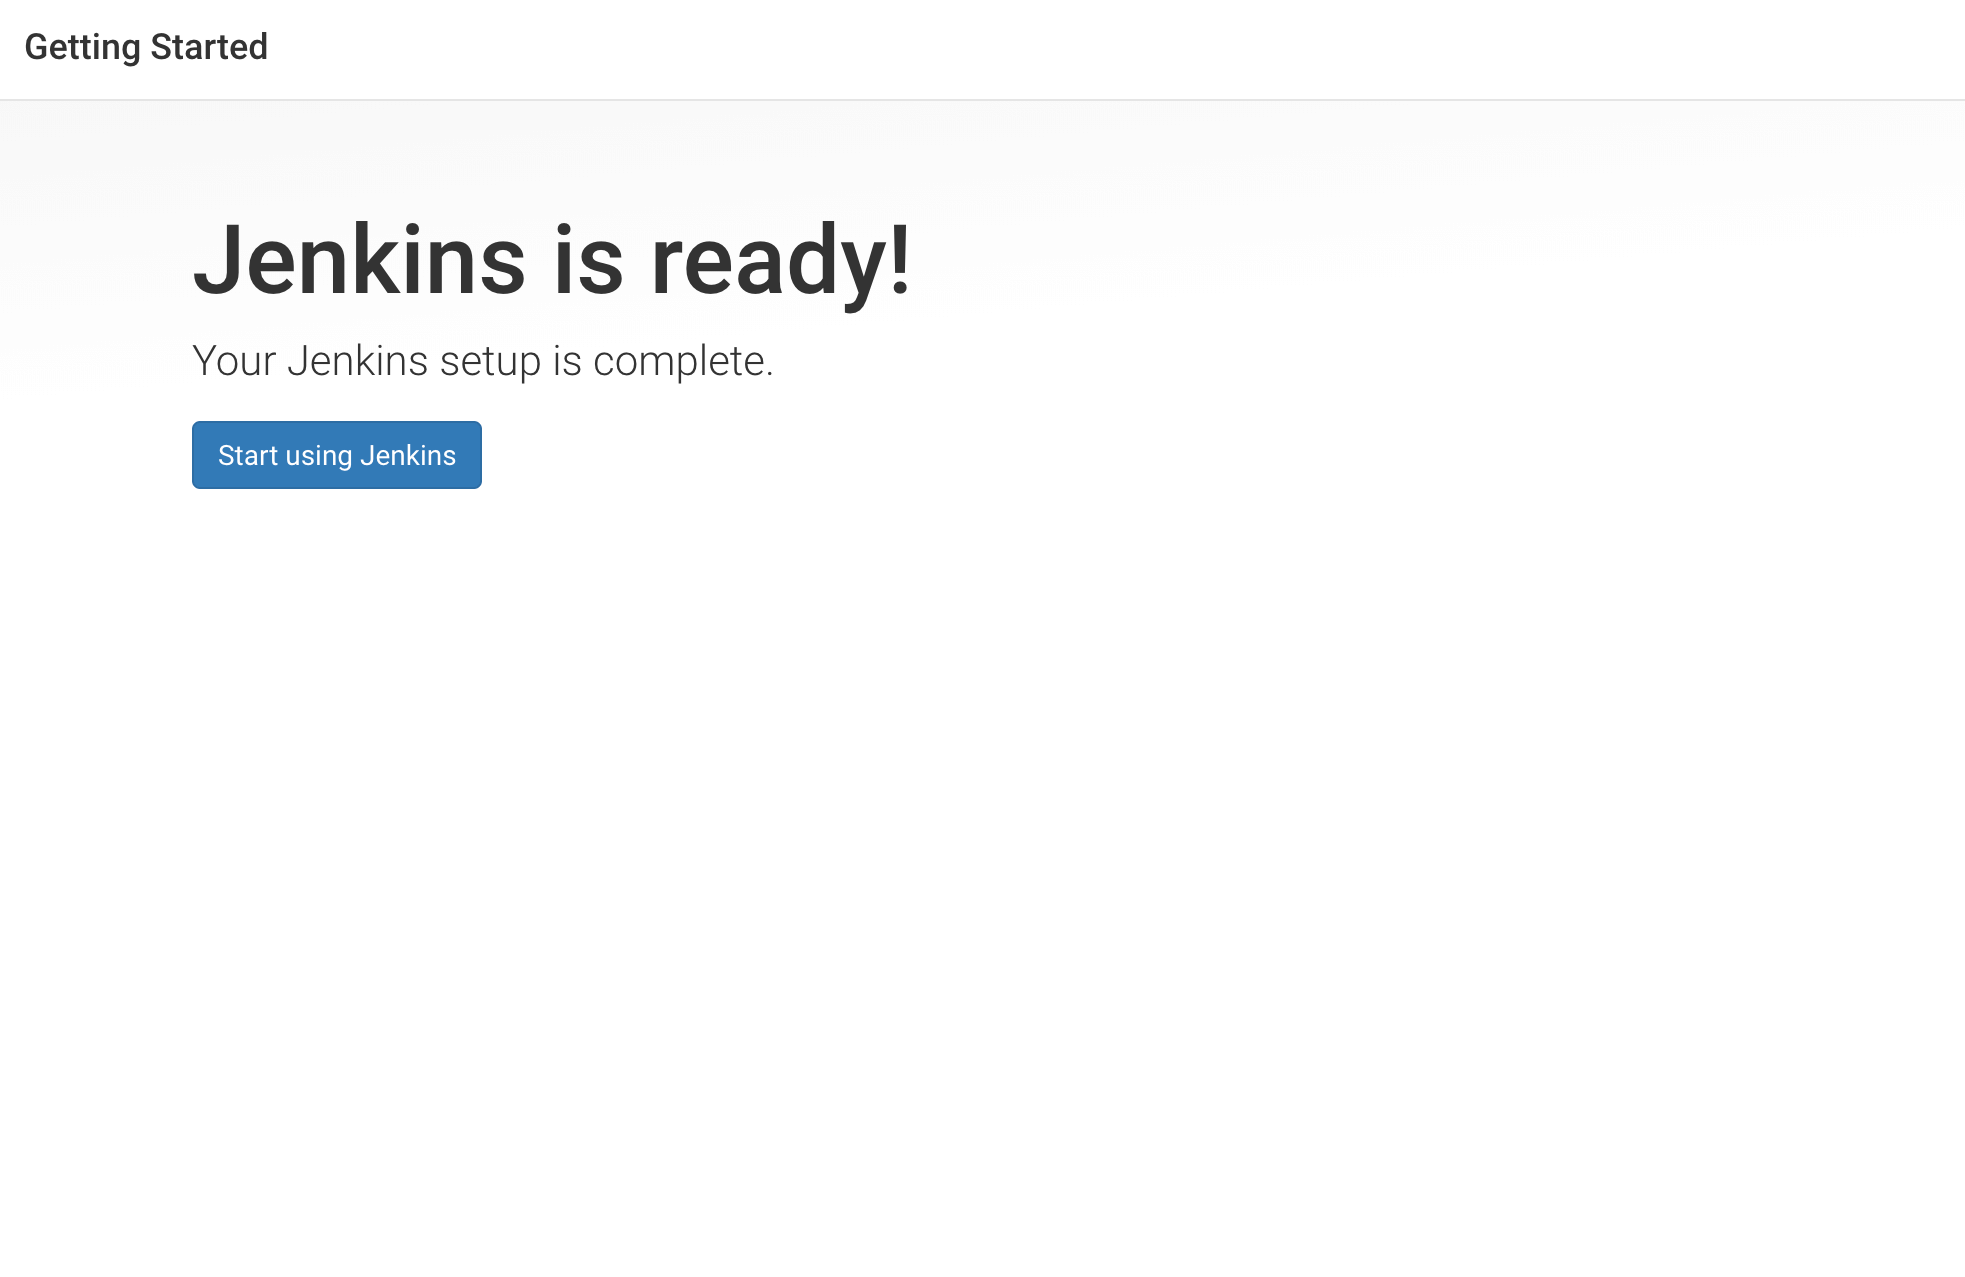 Jenkins is ready page